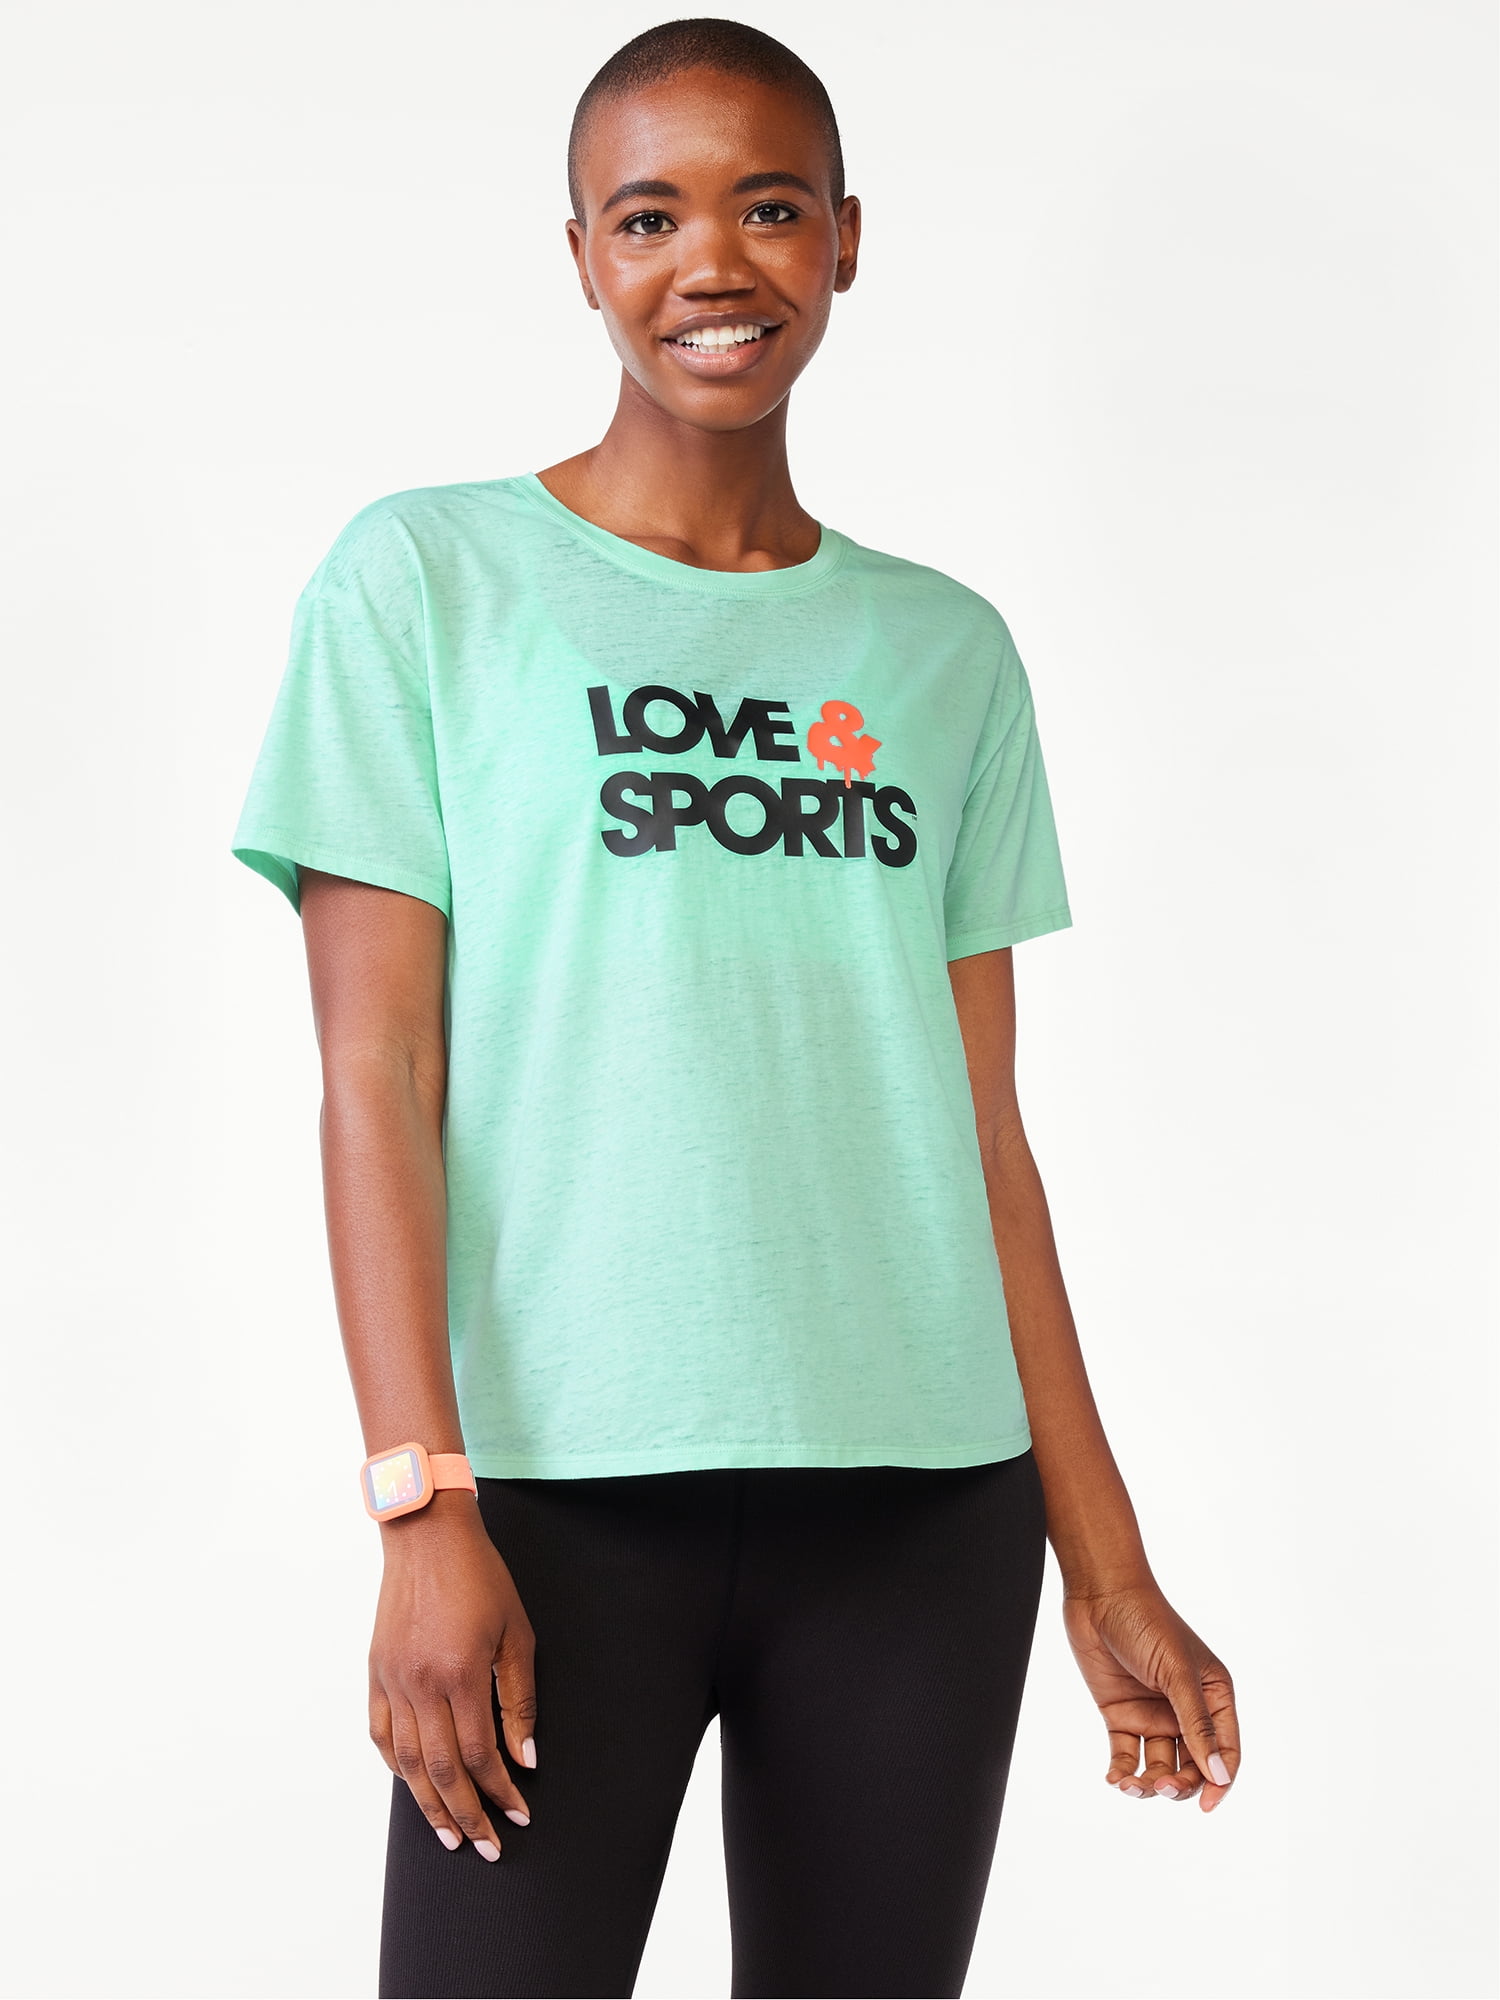 Love & Sports Women's Logo Tee with Short Sleeves, Sizes XS-3XL - Walmart. com